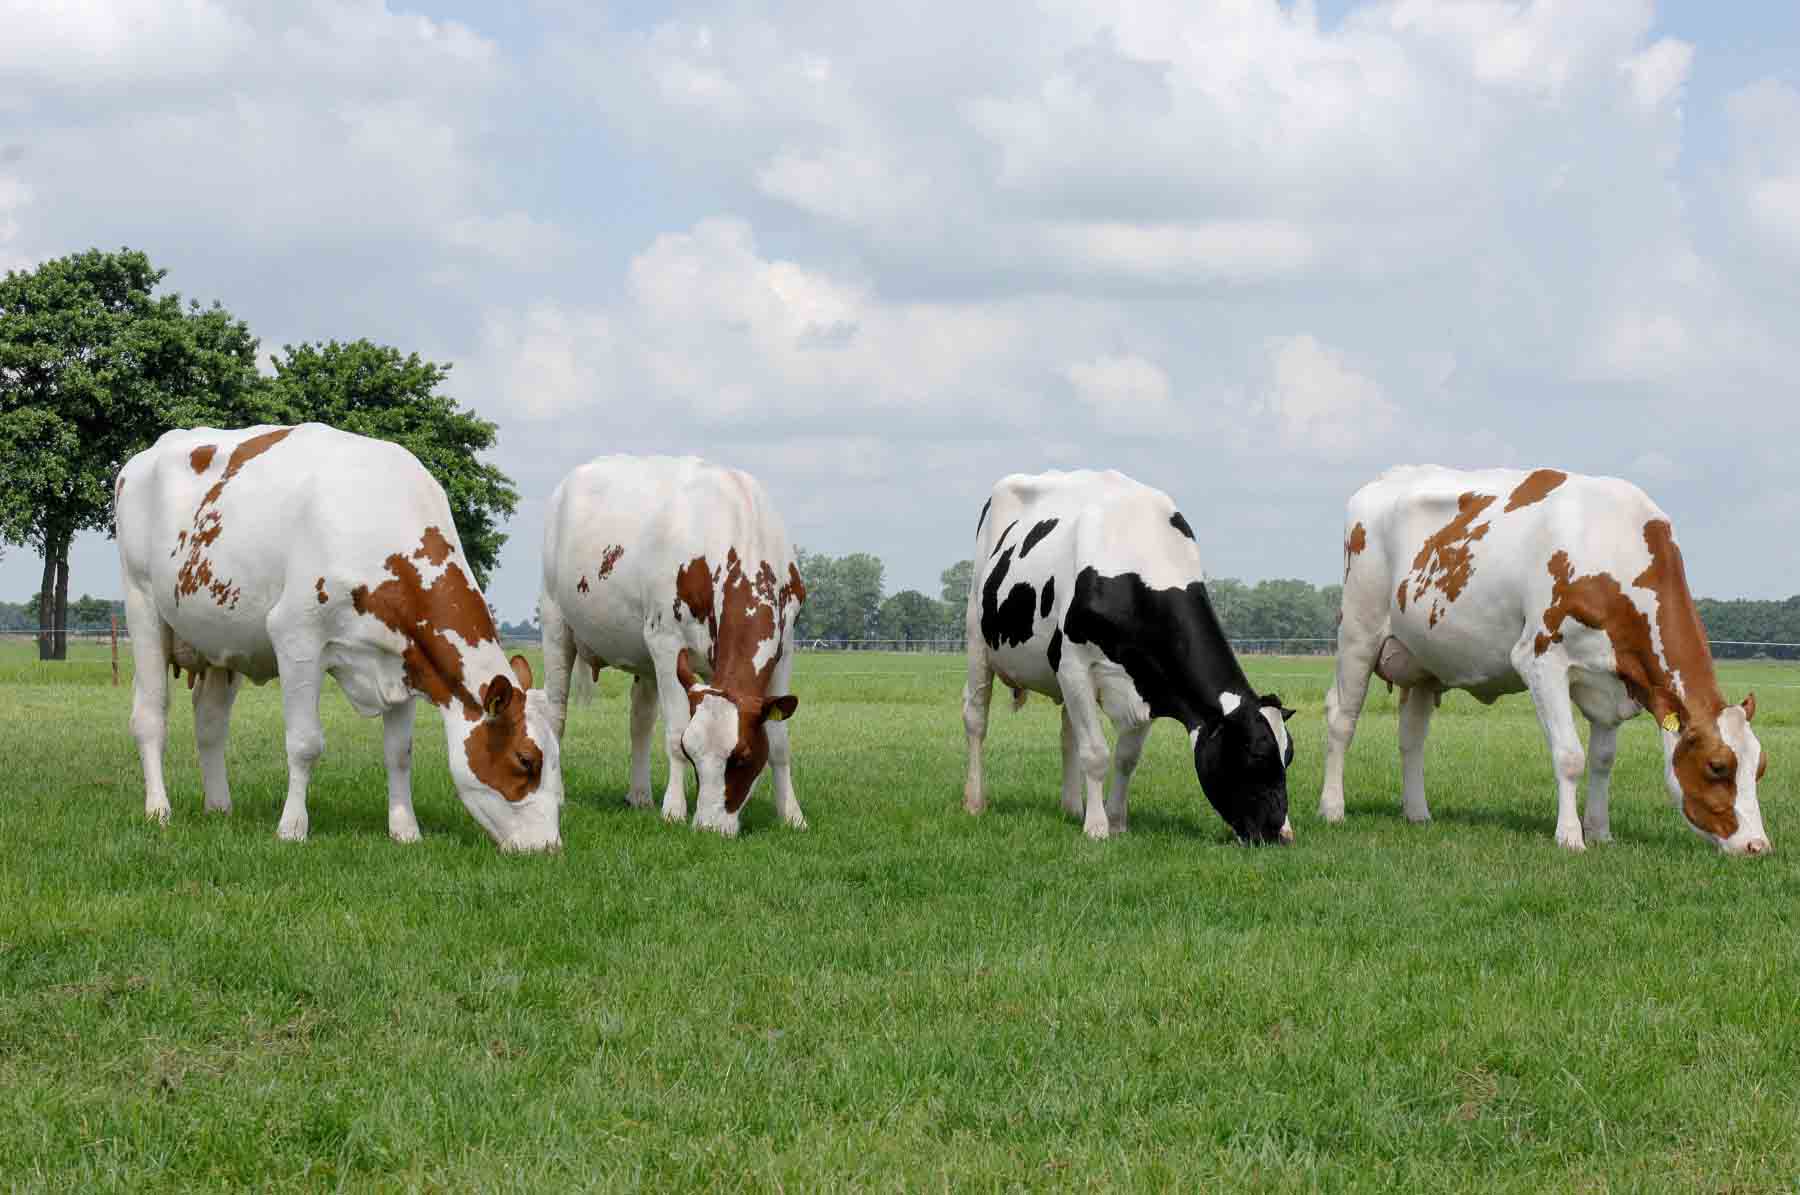 20 Hf Cows Images, Stock Photos & Vectors | Shutterstock